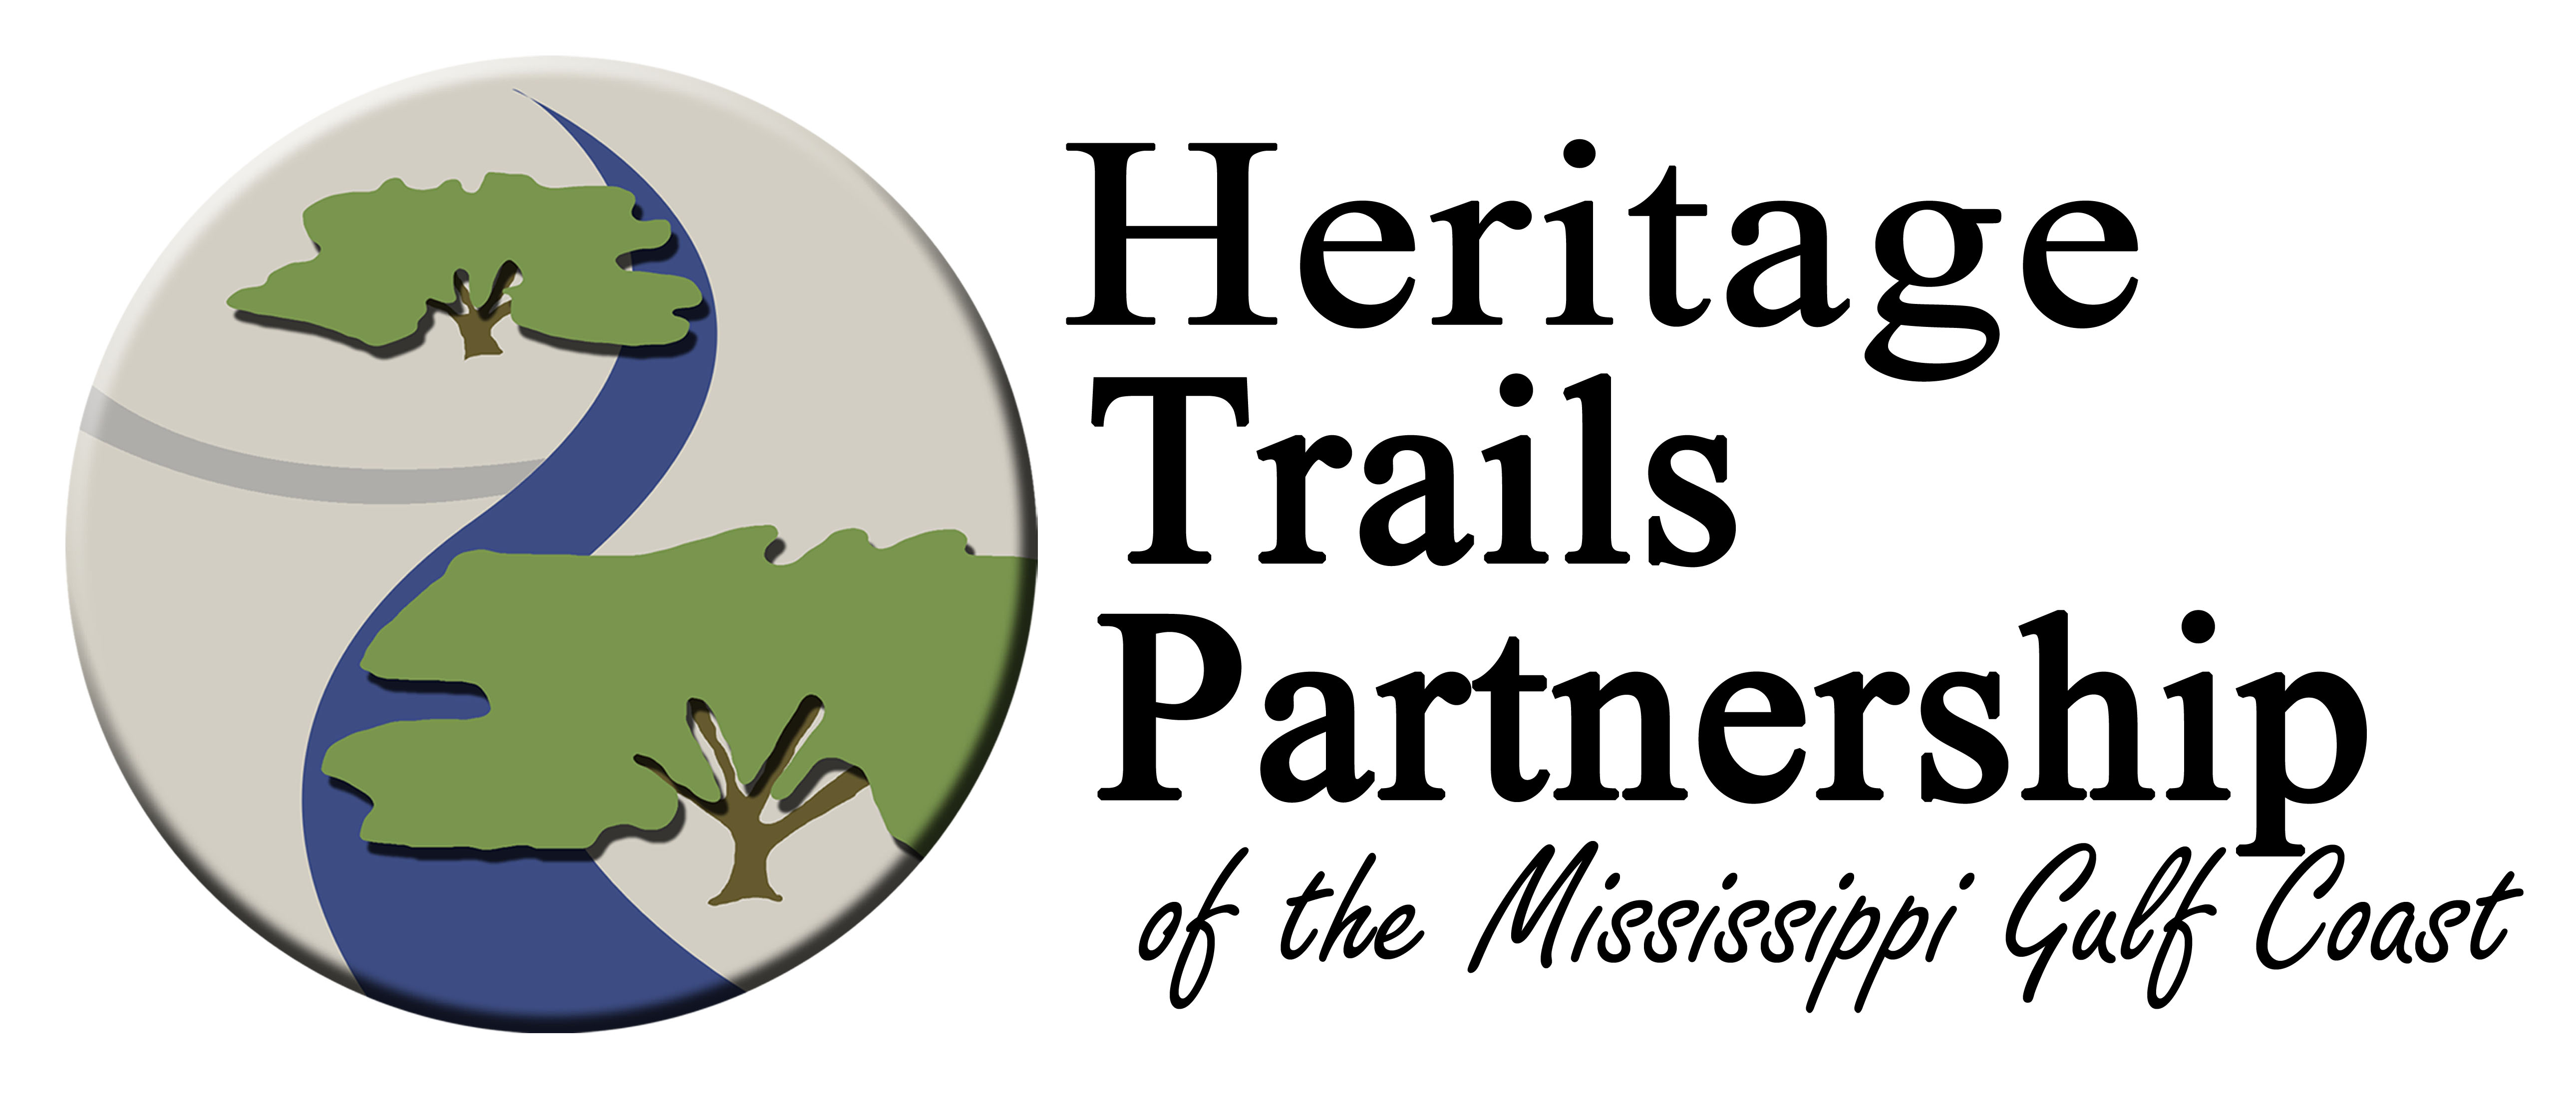 Heritage Trails Partnership of the Mississippi Gulf Coast